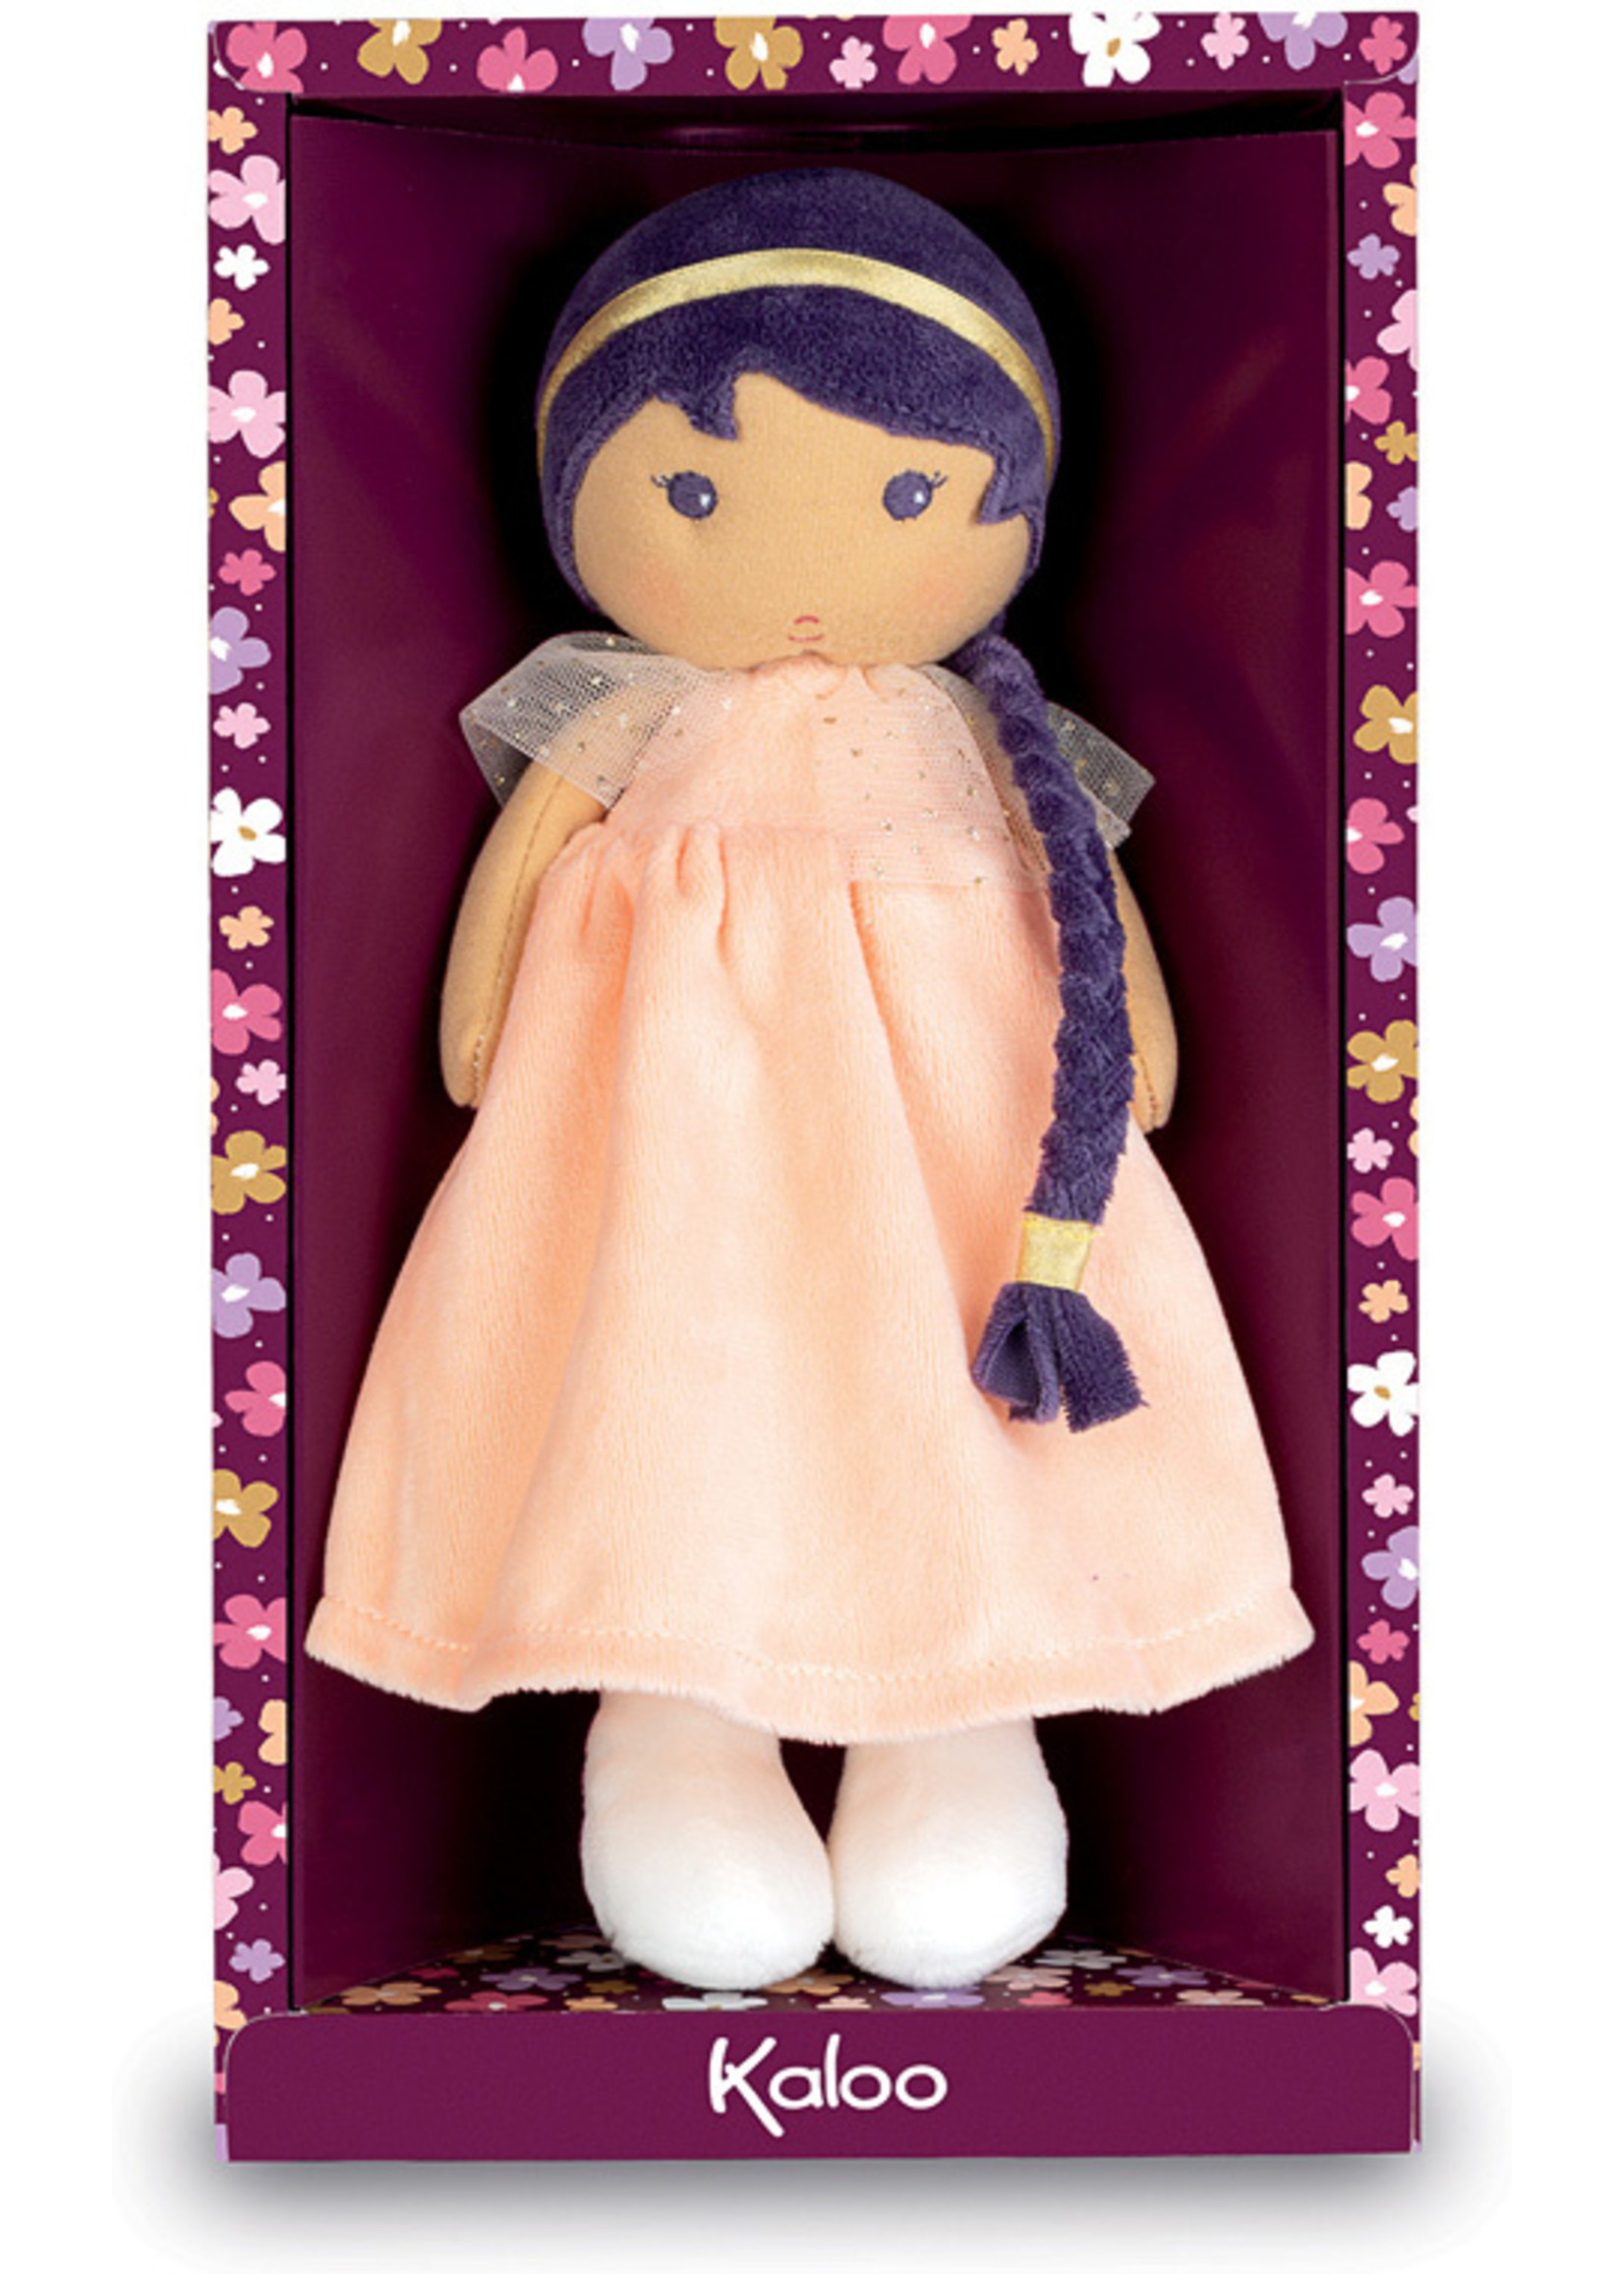 Juratoys Kaloo Tendresse My First Doll - Princess Iris K - Medium